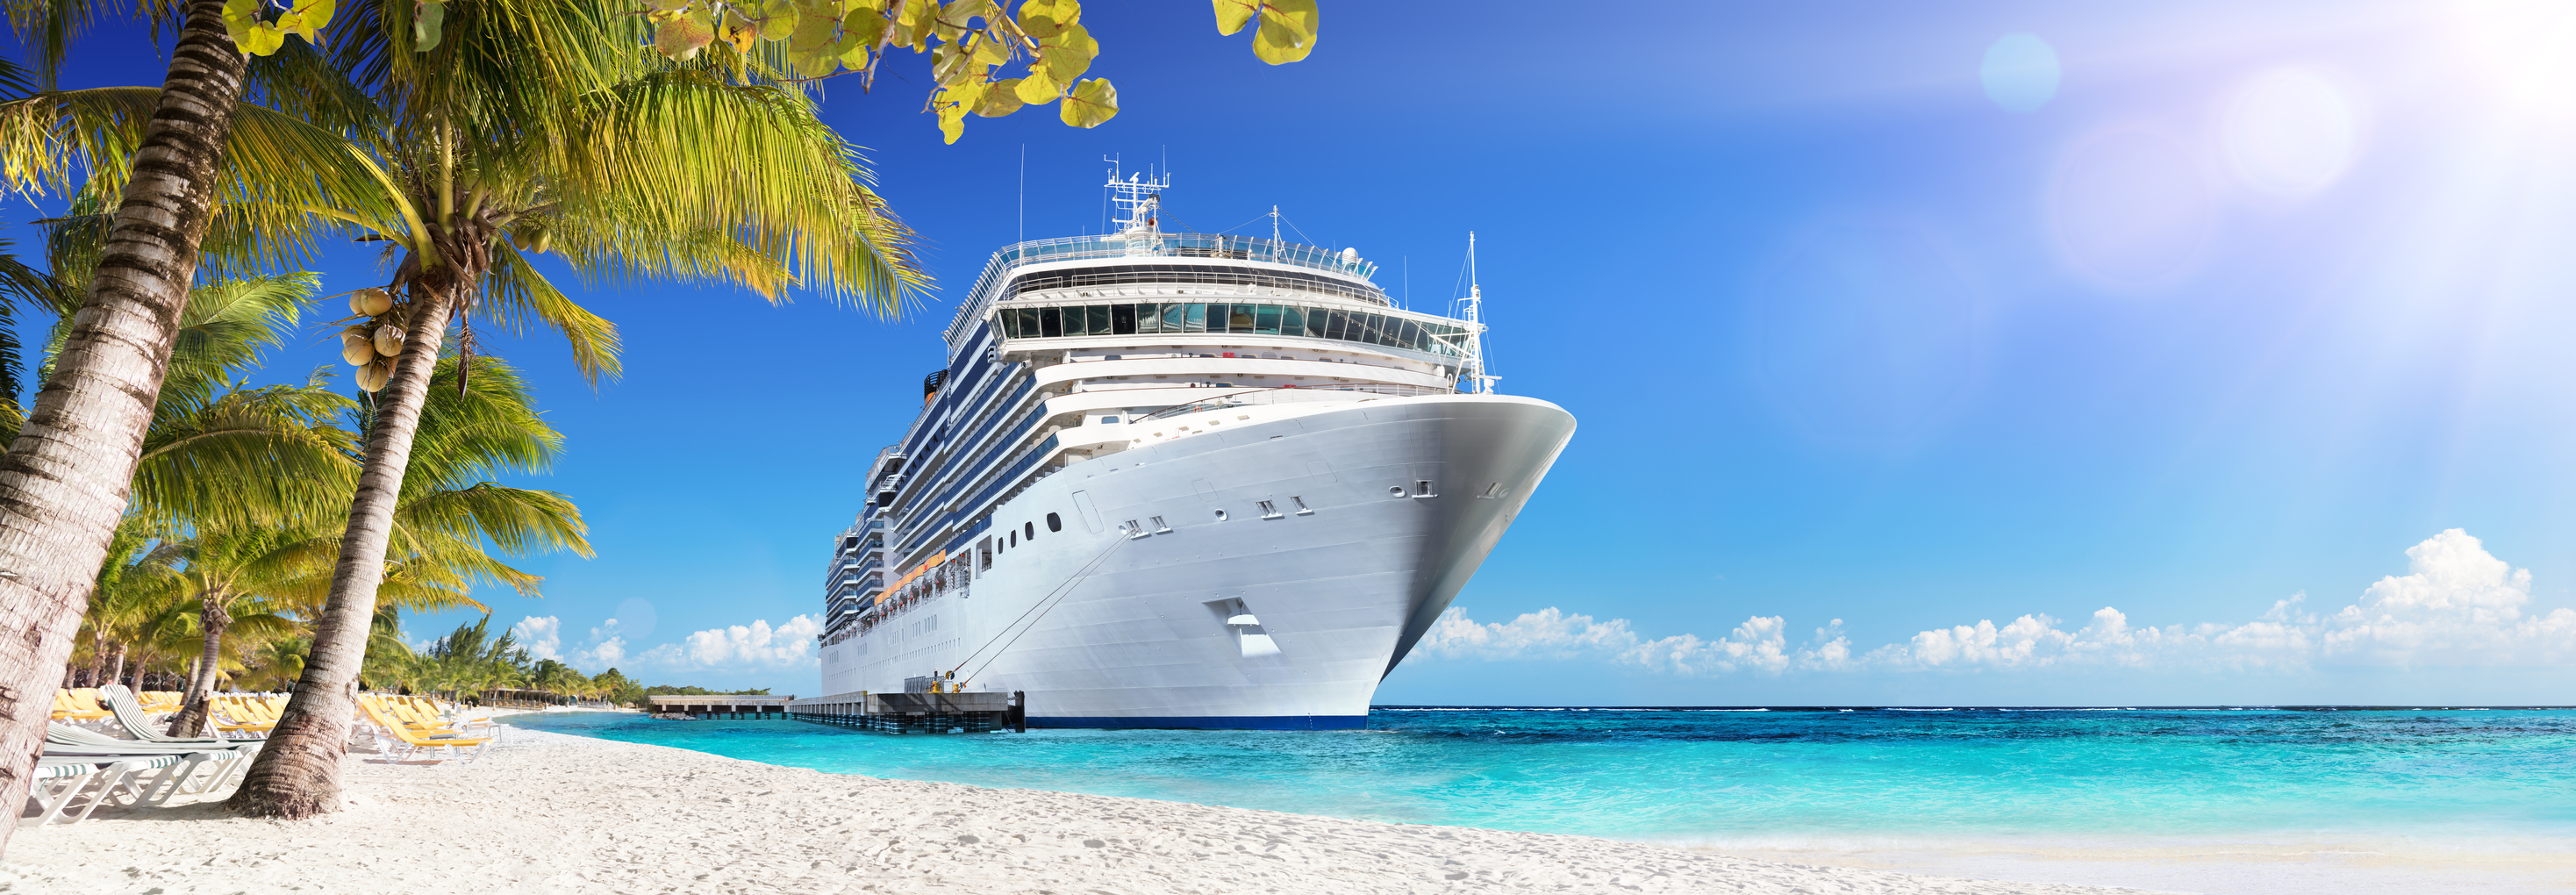 7-night MSC Caribbean cruise from $209